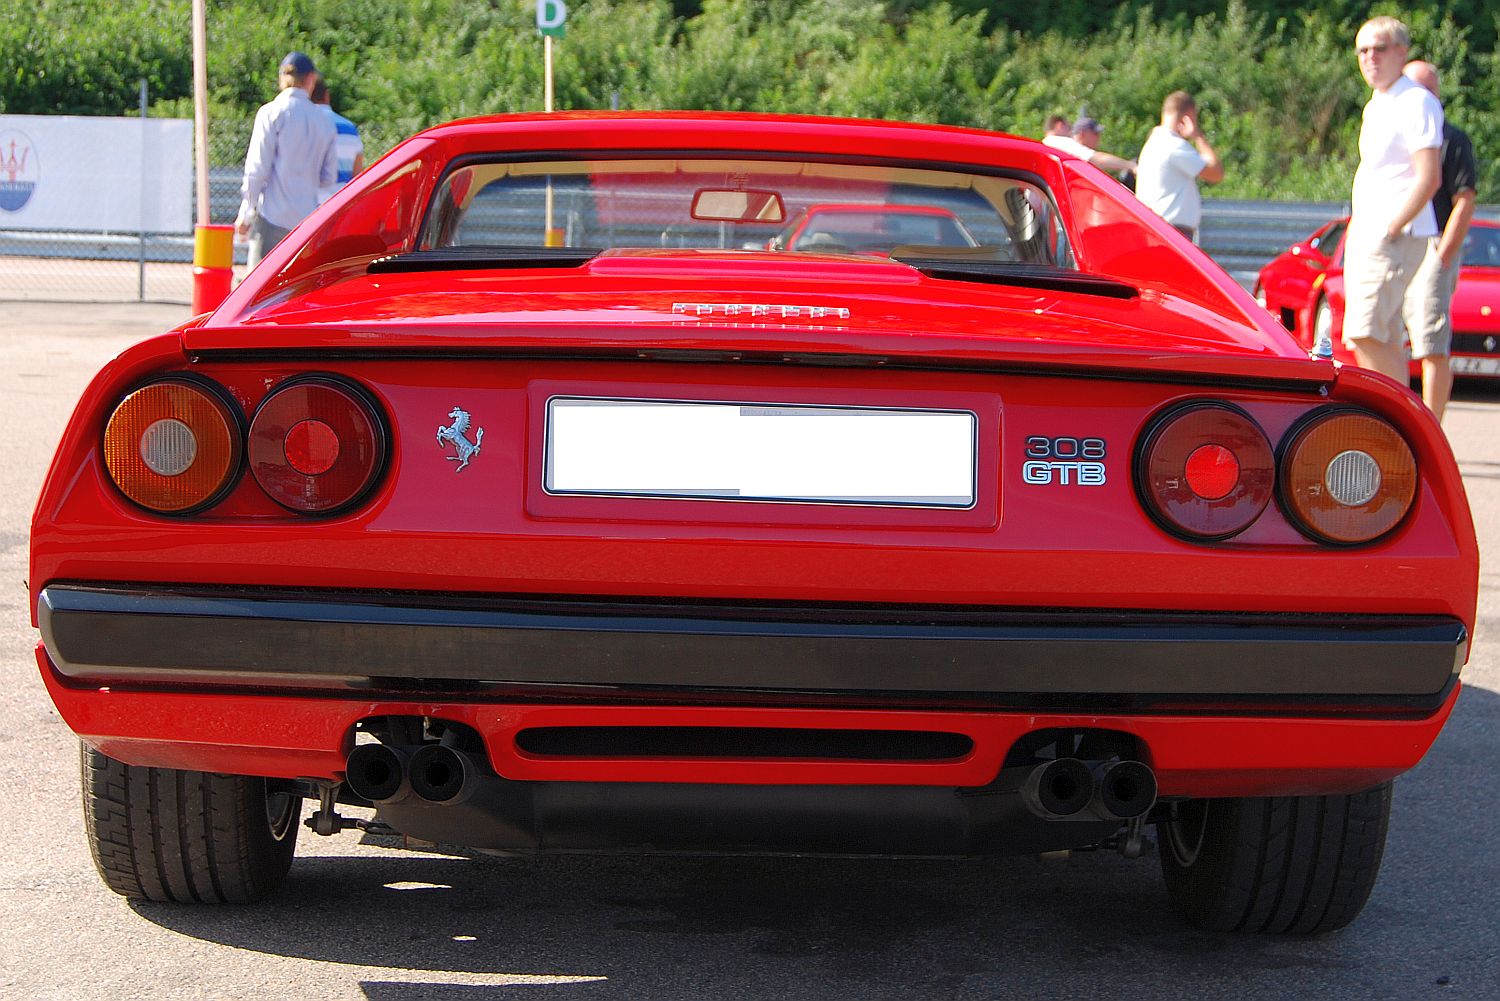 Ferrari 308 GTB rear